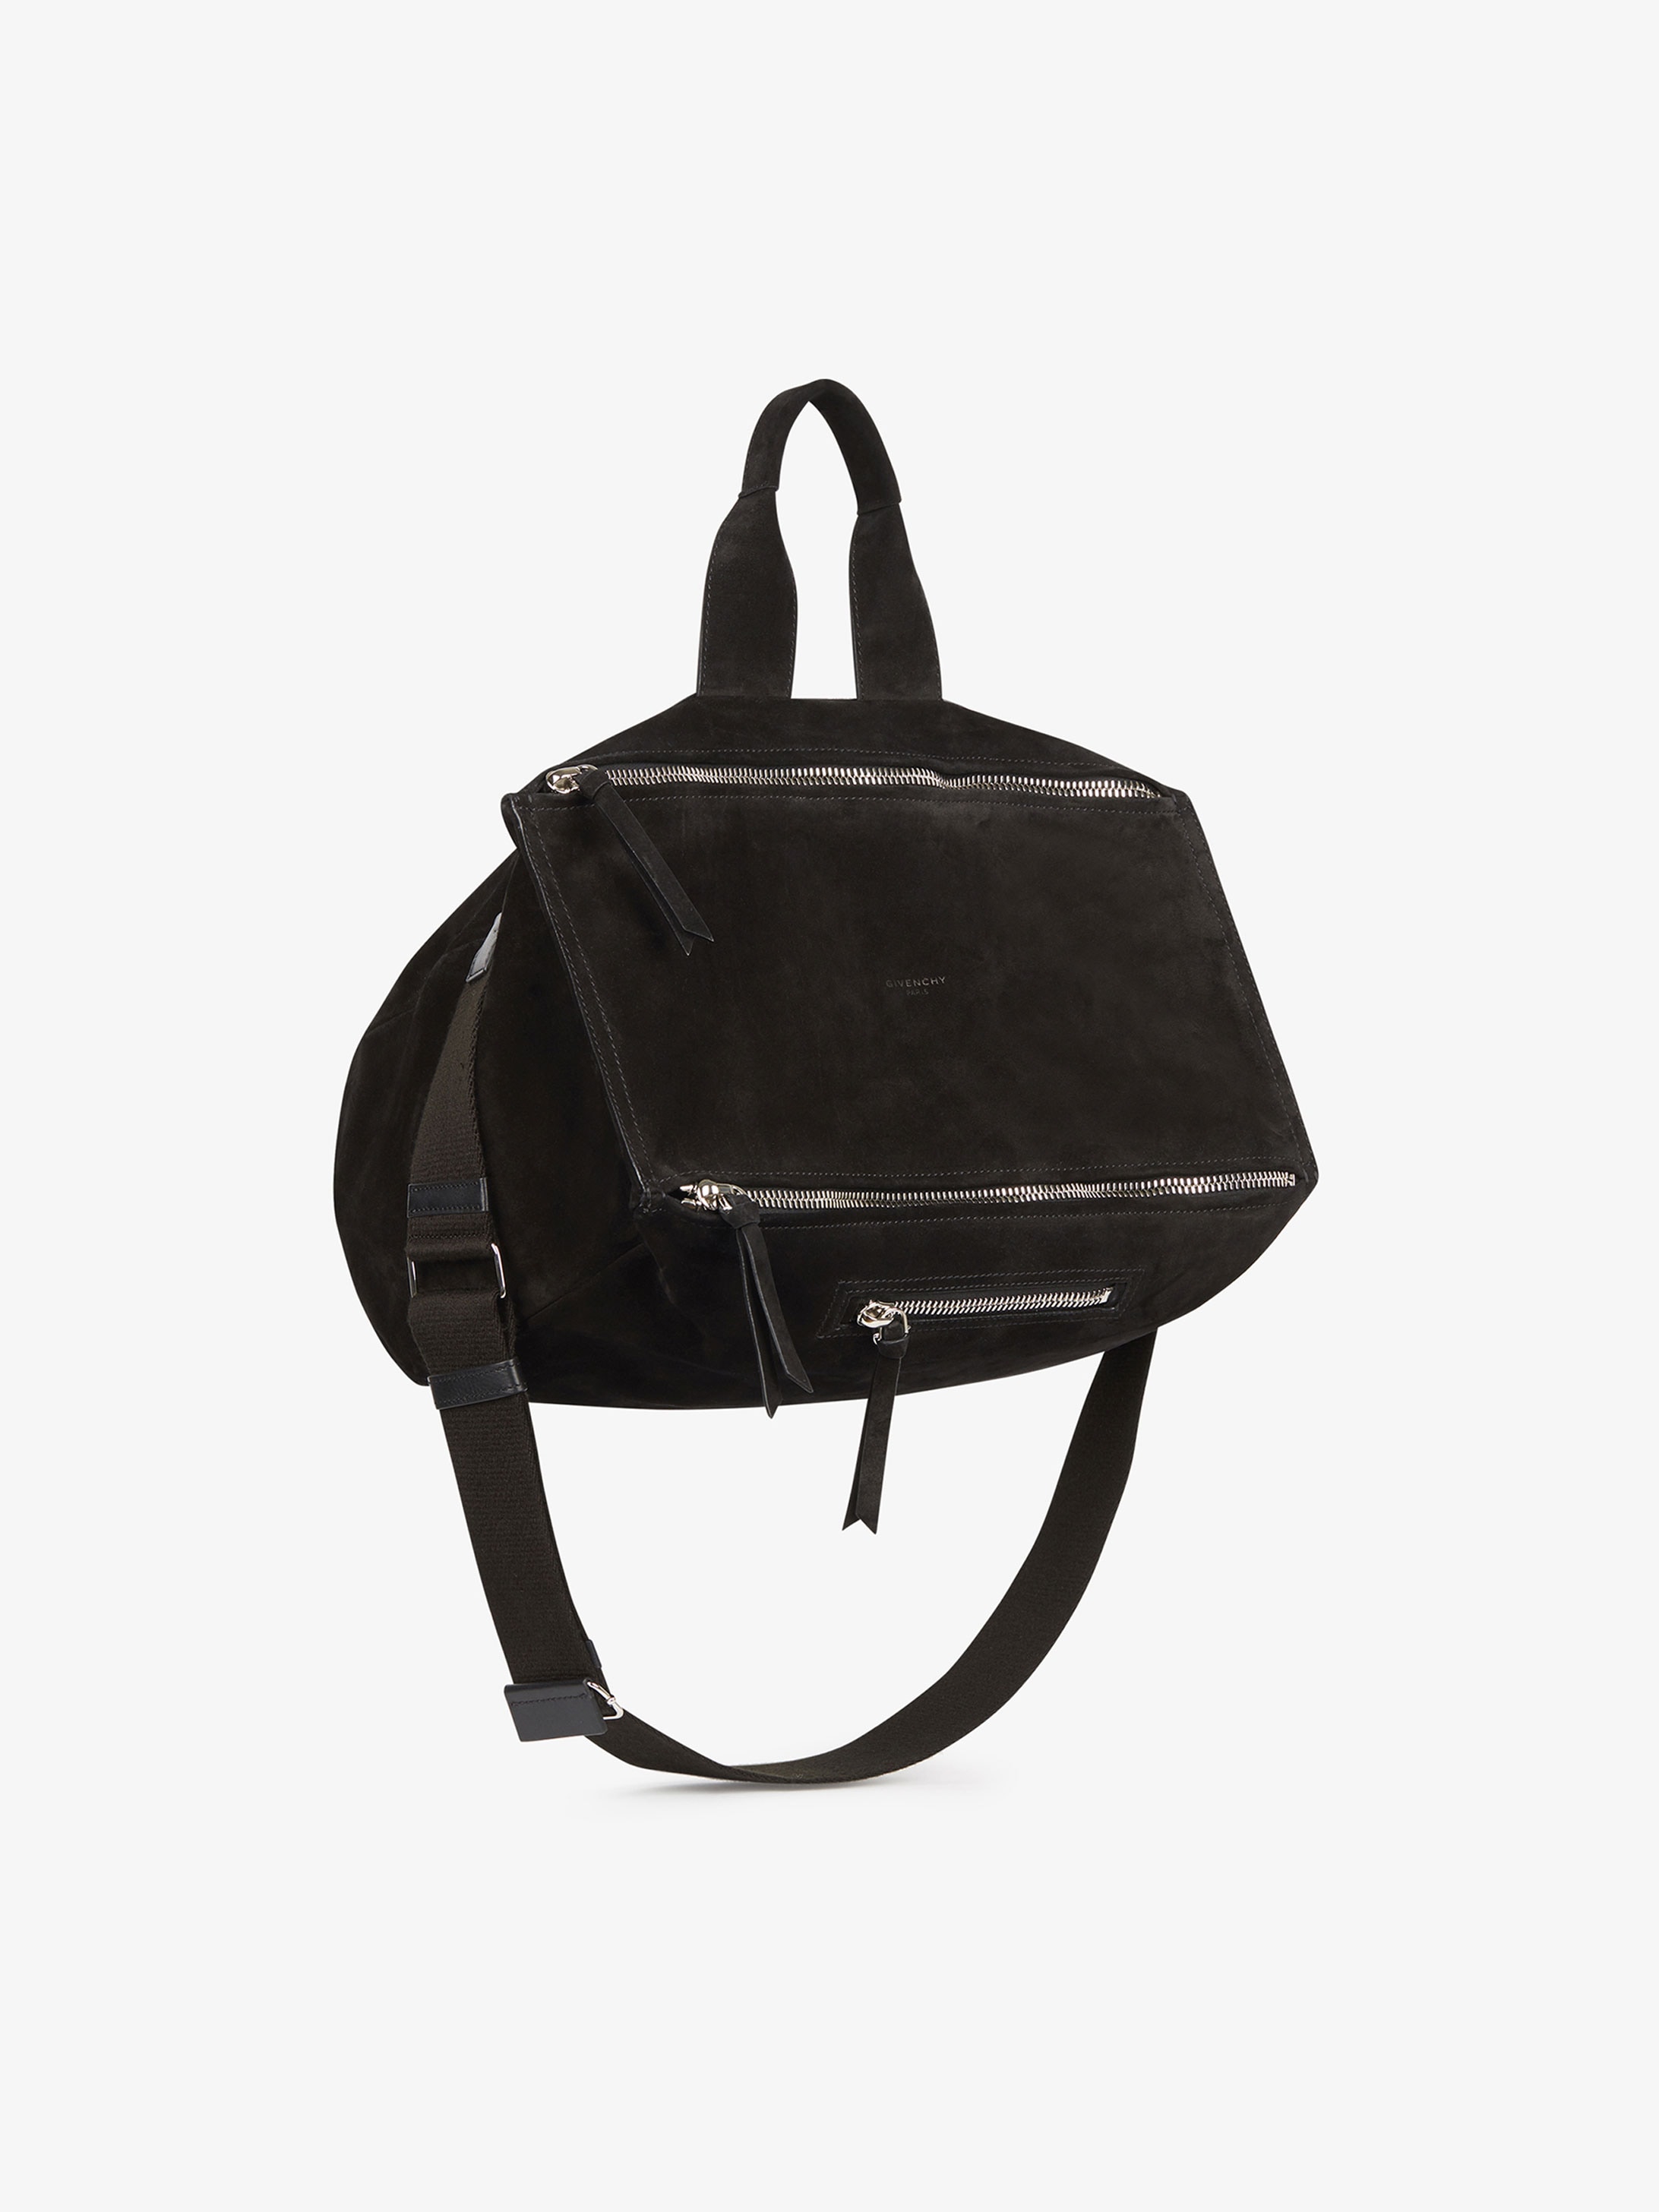 Givenchy Pandora messenger bag in suede 